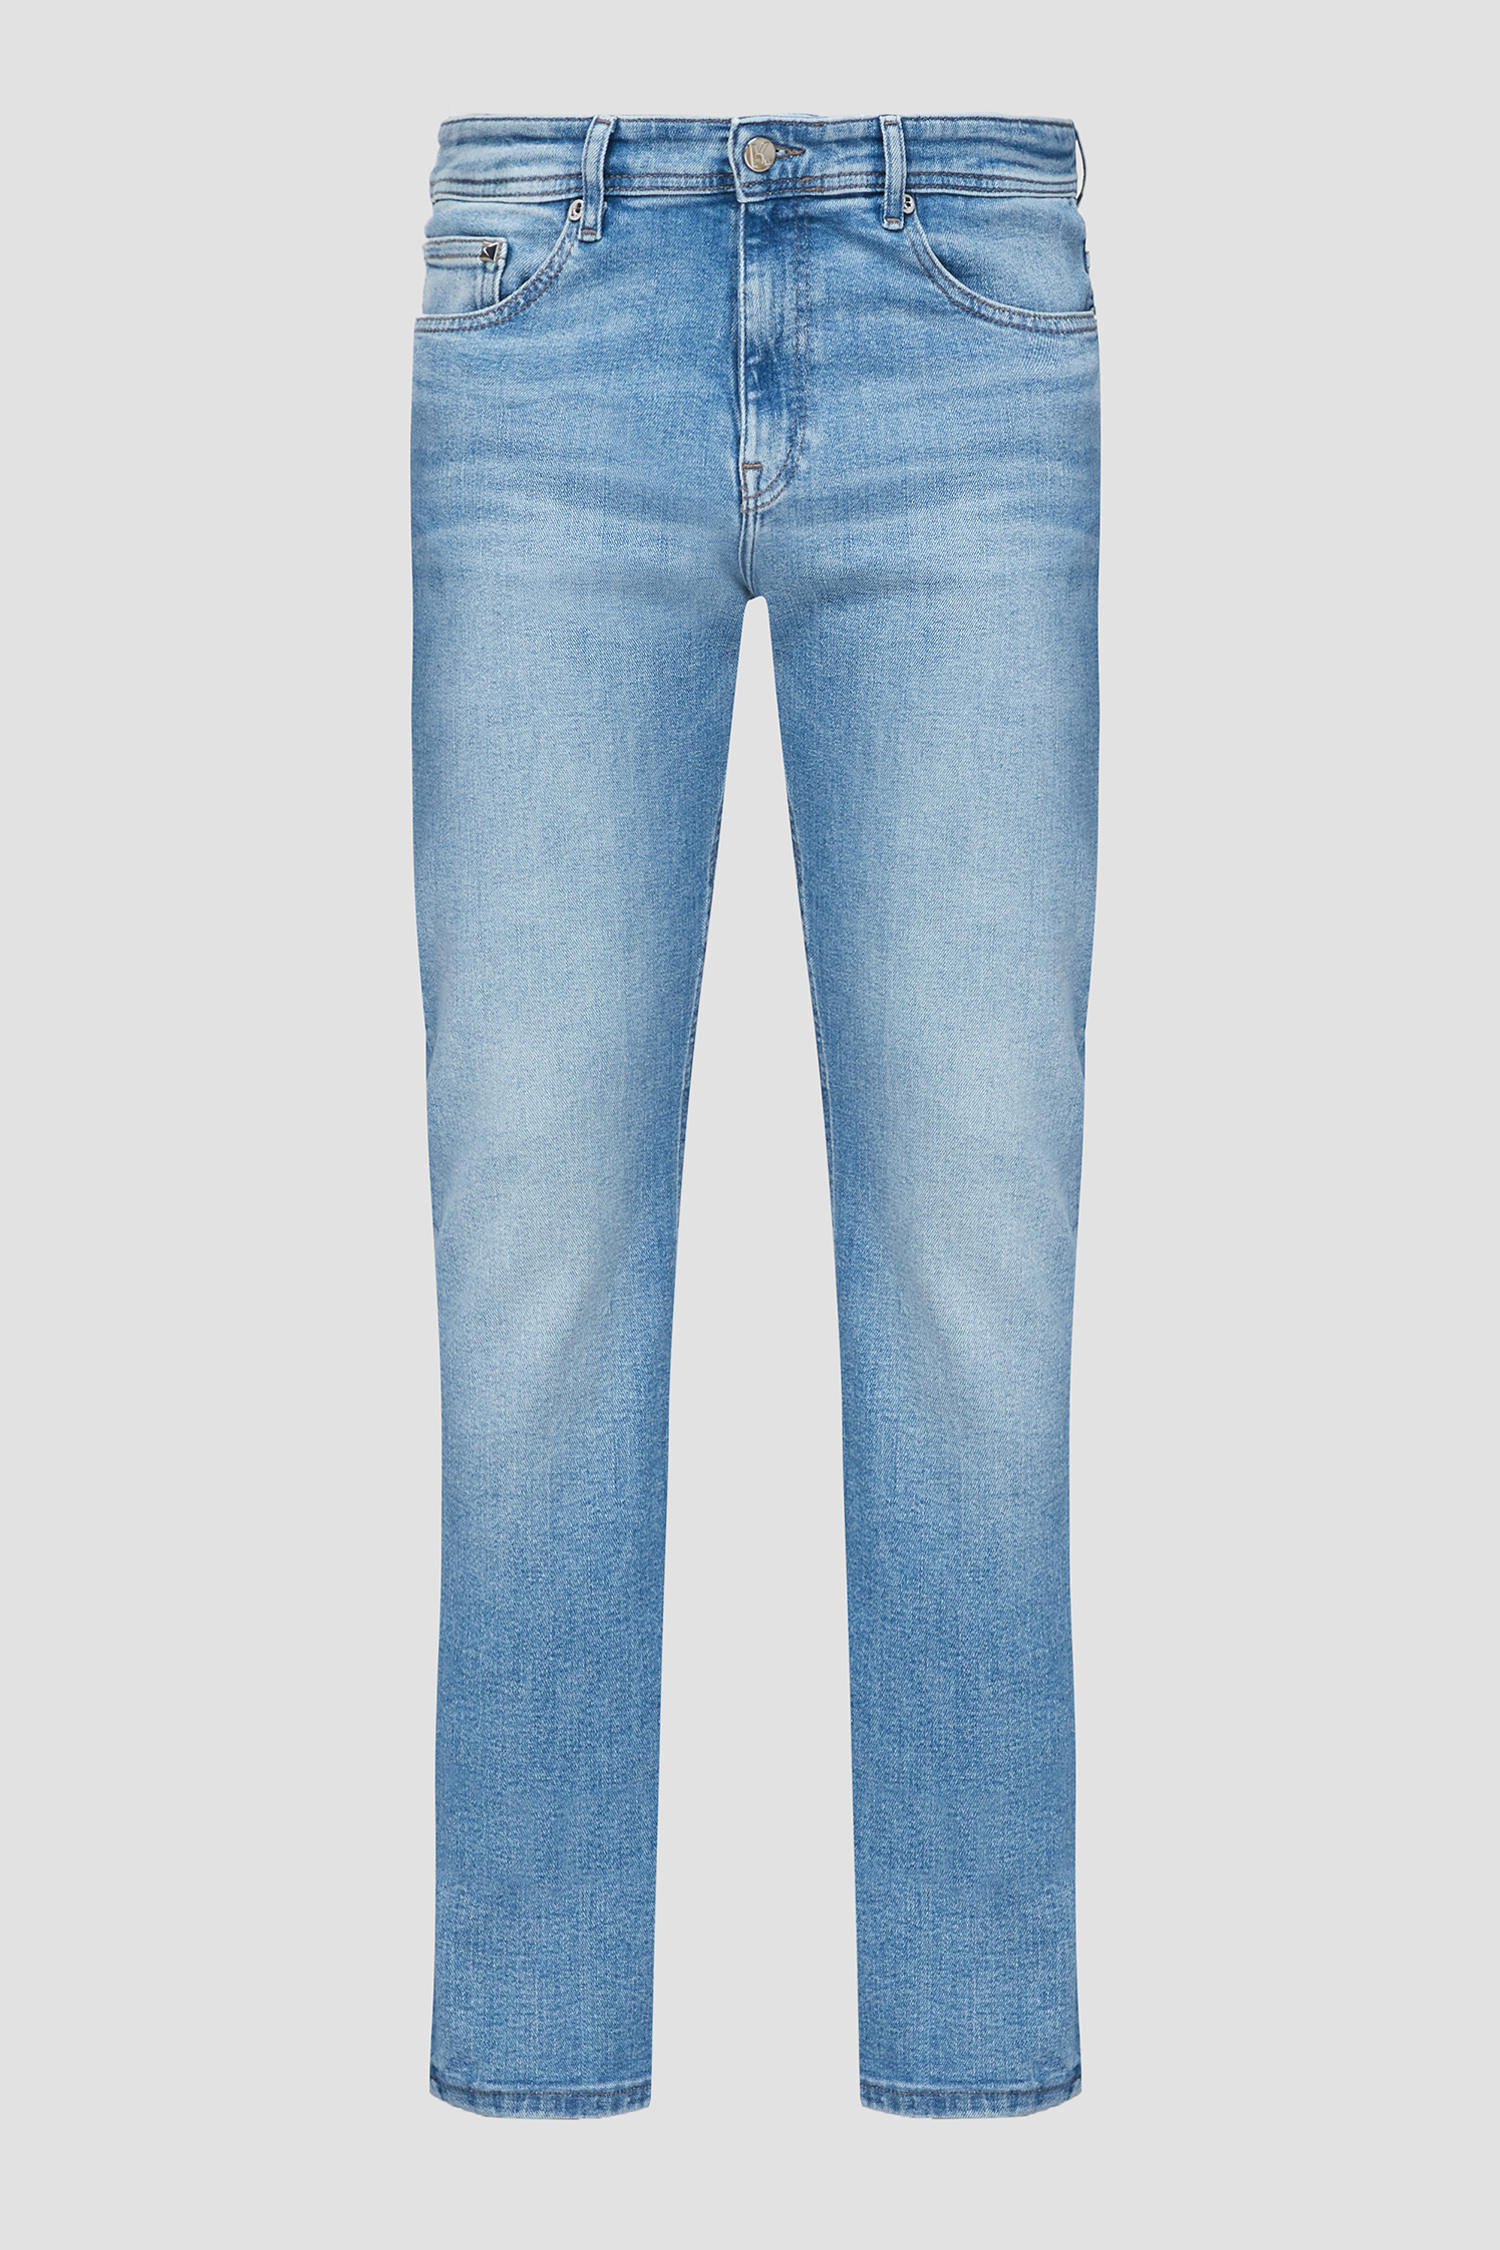 Мужские голубые джинсы Karl Lagerfeld 532853.265840;620